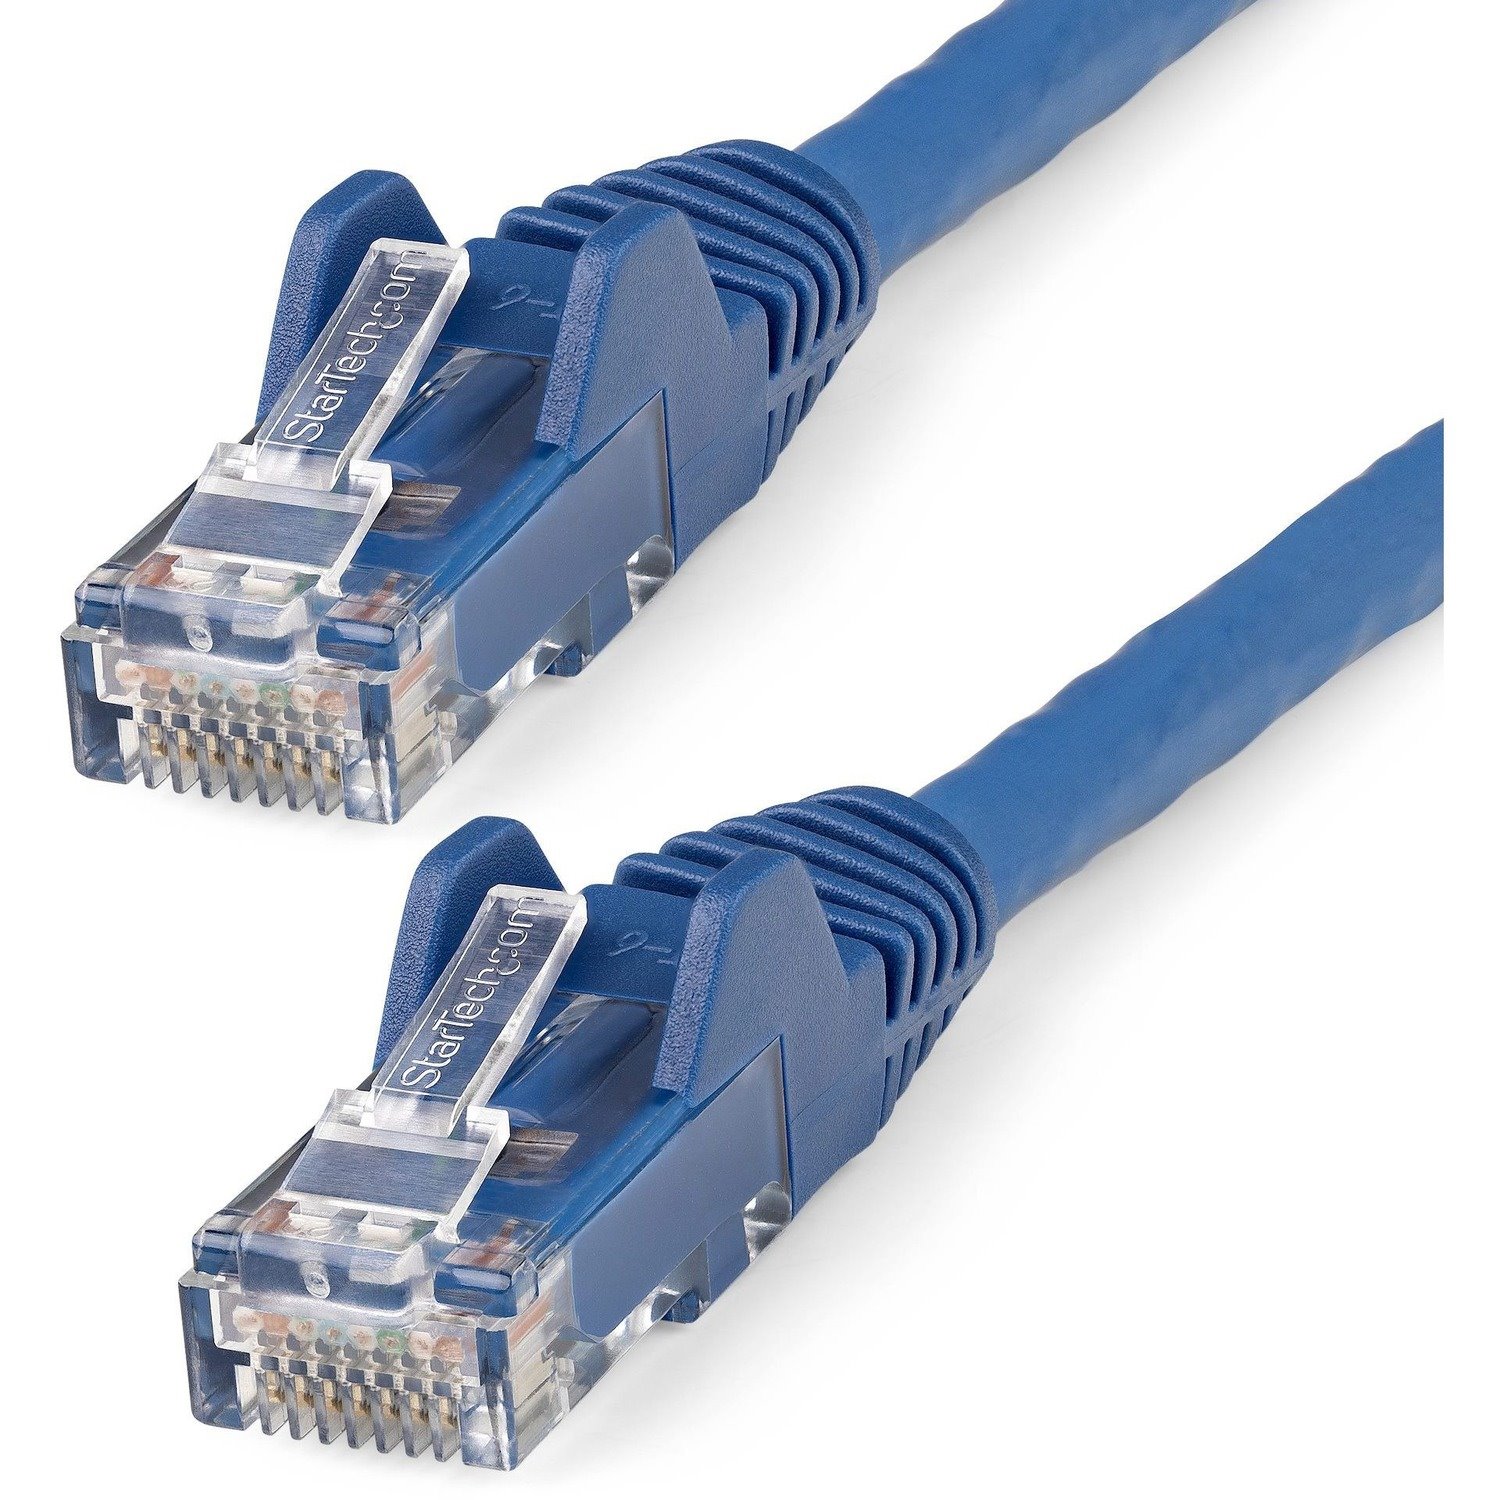 StarTech.com 50cm CAT6 Ethernet Cable, LSZH (Low Smoke Zero Halogen), 10 GbE Snagless 100W PoE UTP RJ45 Blue CAT 6 Network Patch Cord, ETL